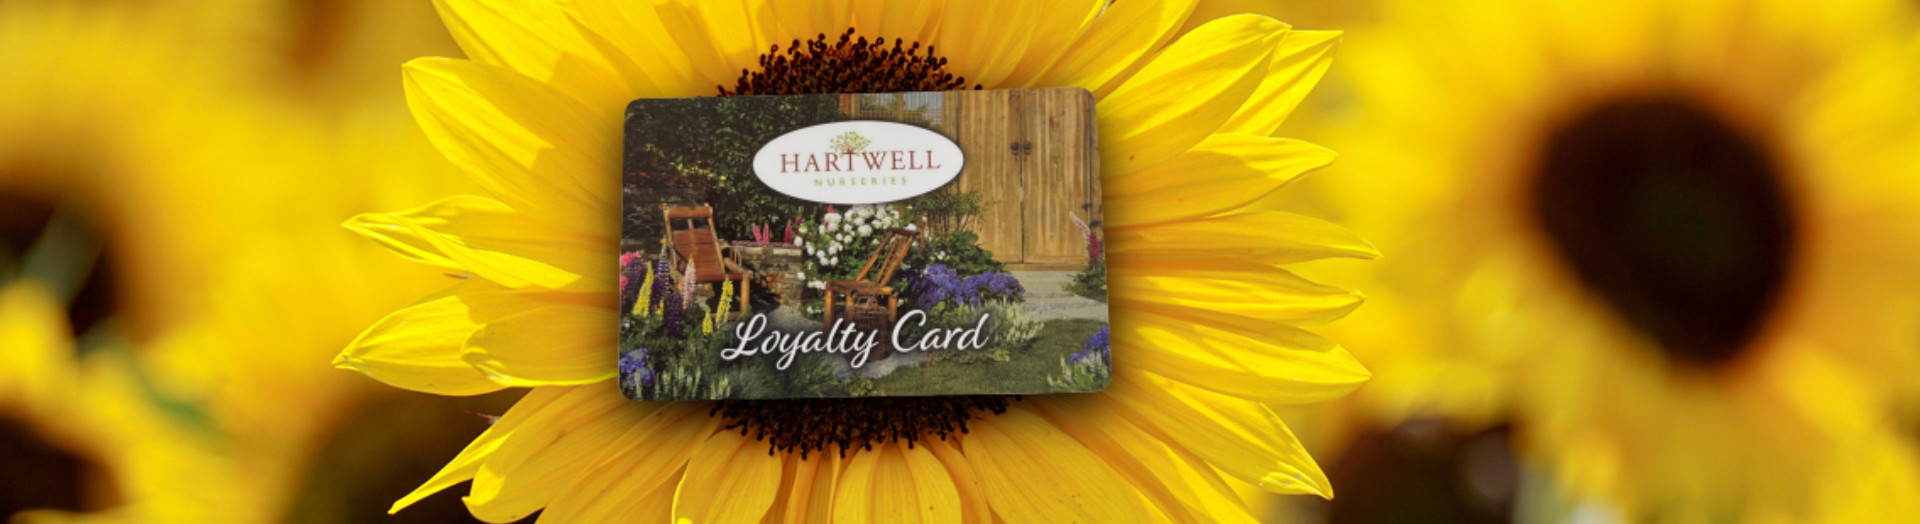 Hartwell Loyalty Card